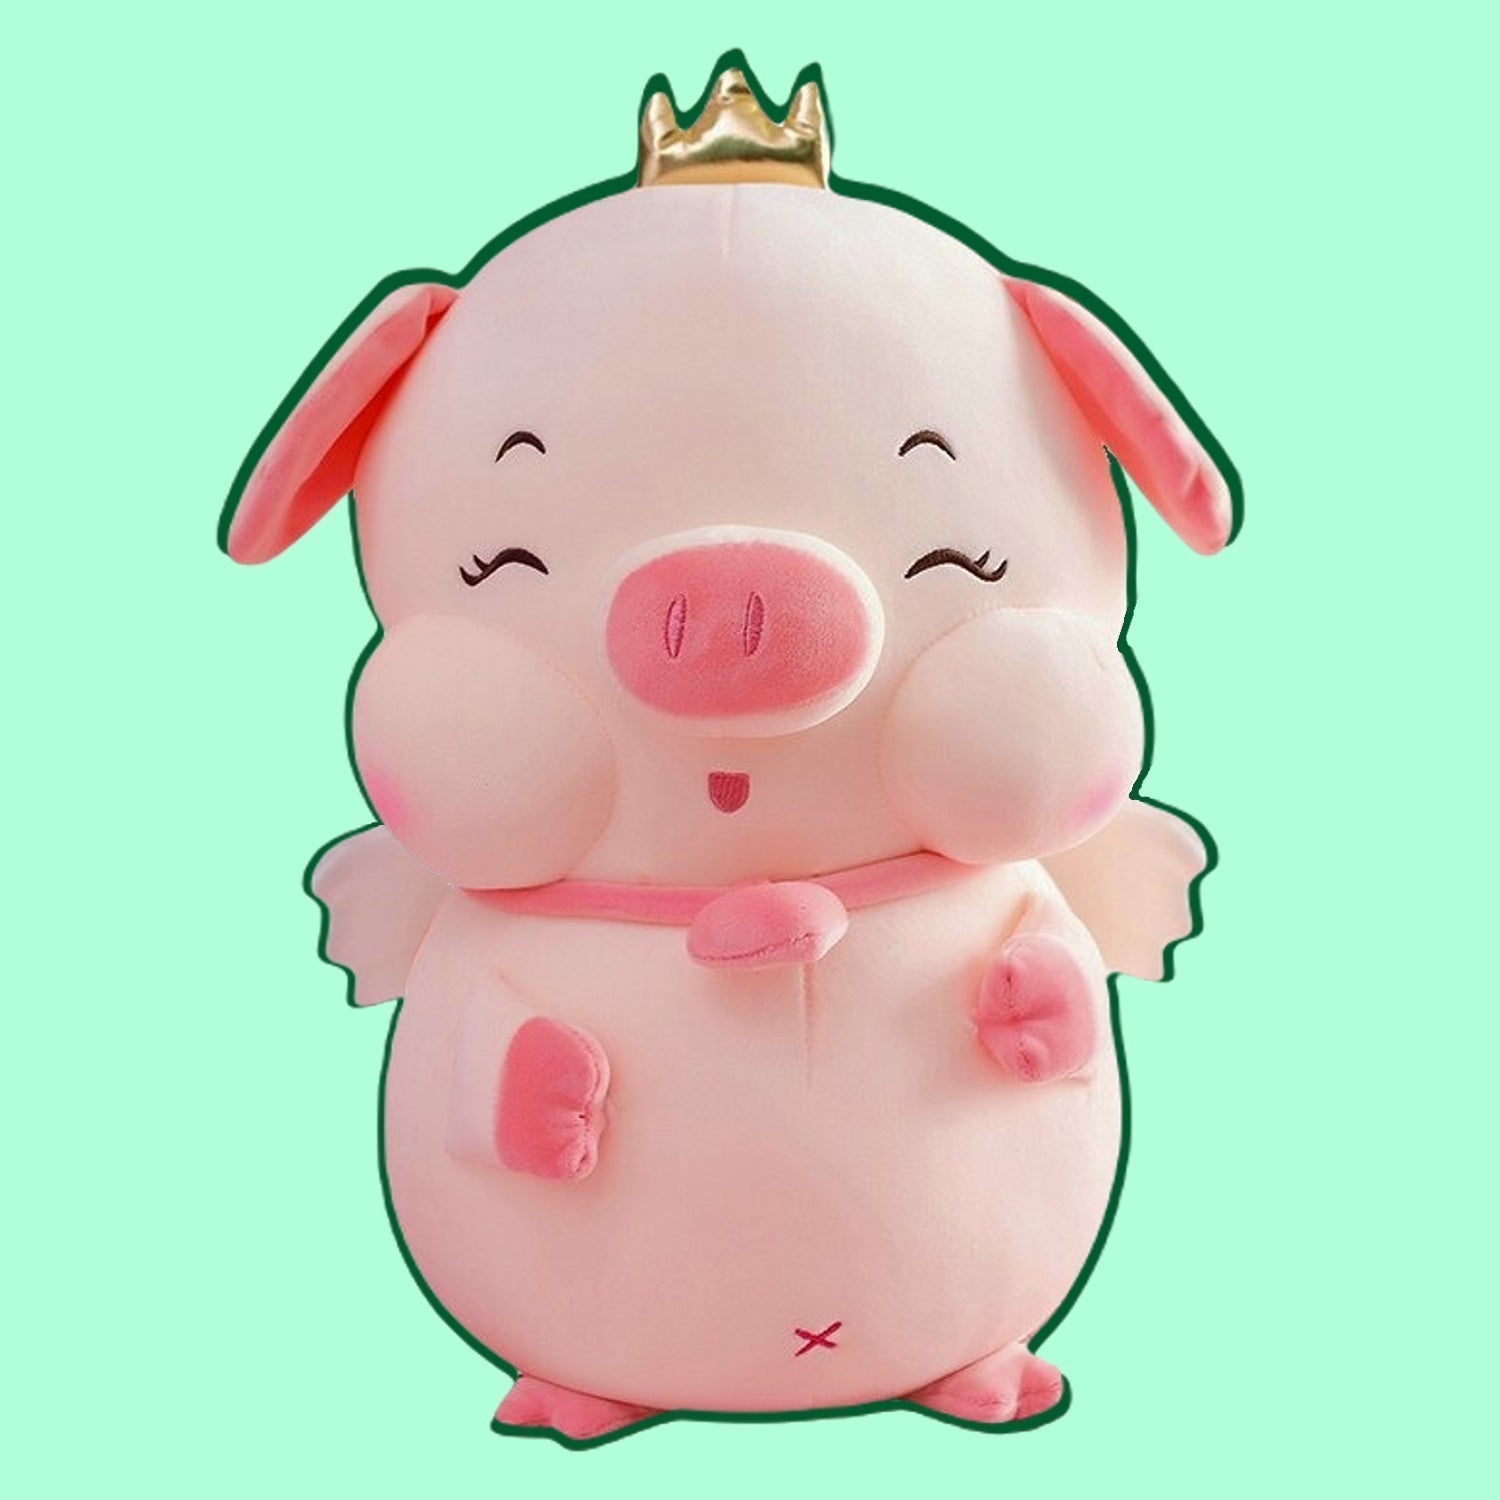 omgkawaii 🐰 Land Animals Plushies PRE-ORDER Cute Angel Pig with crown